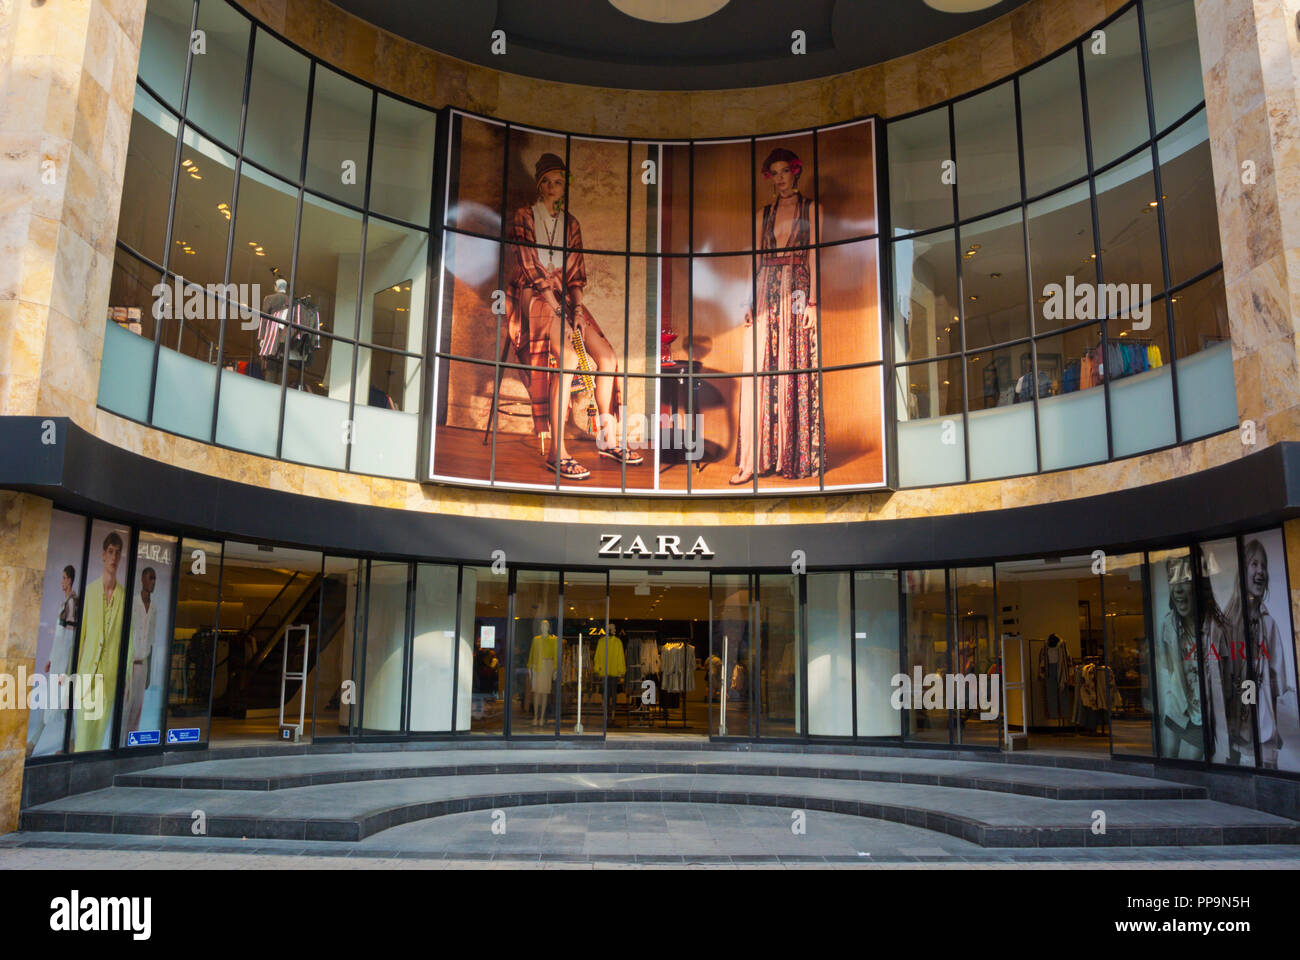 Zara, Rue Neuve, Brussels, Belgium Stock Photo - Alamy